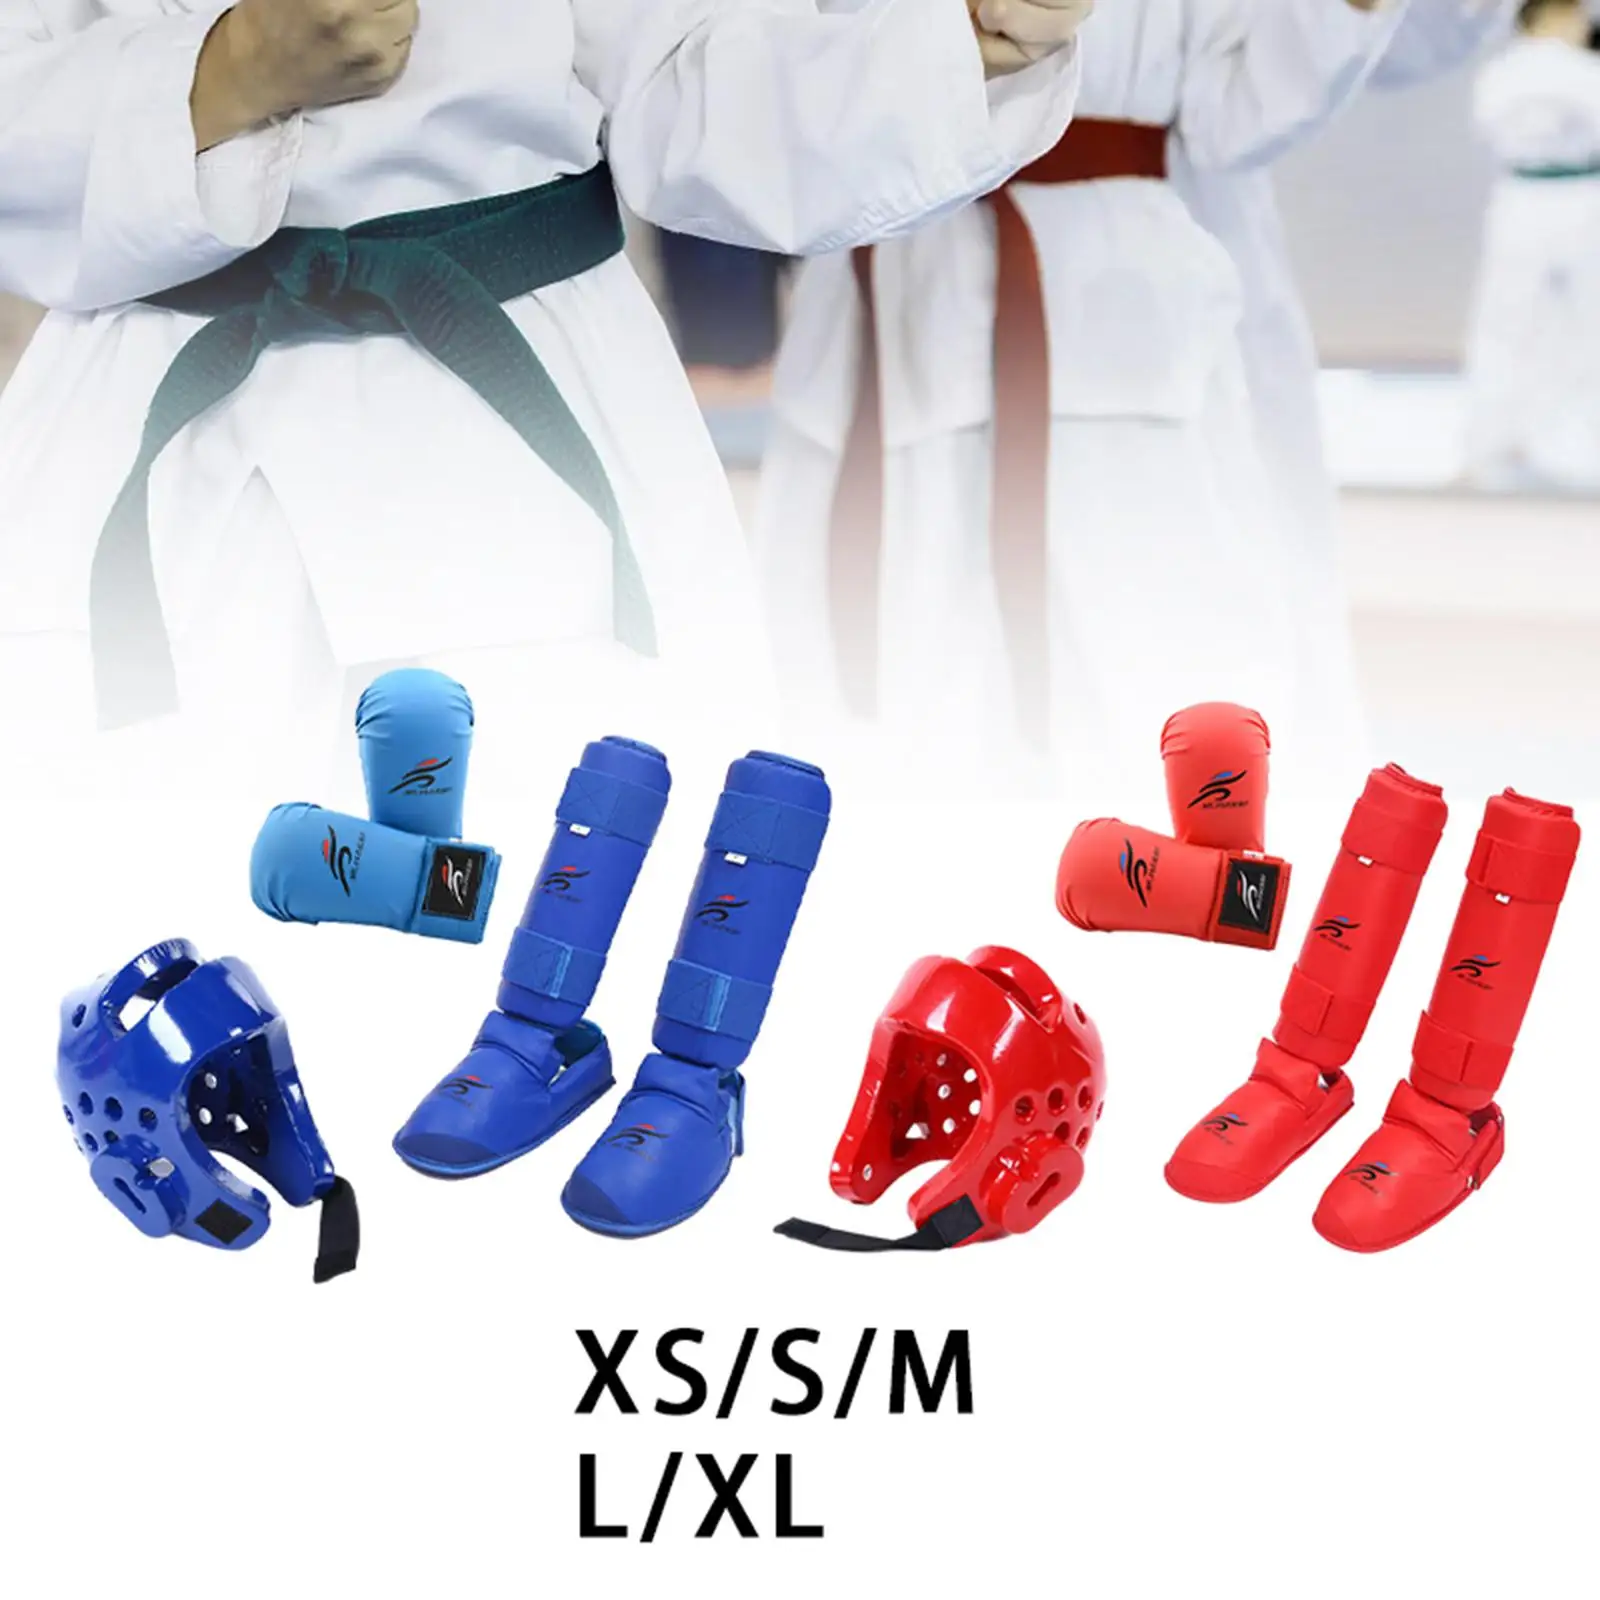 Karate Sparring Gear Set Boxing Equipment Training Gear Boxing Headgear Gloves for Karate Muay Thai Sanda Kickboxing Sparring